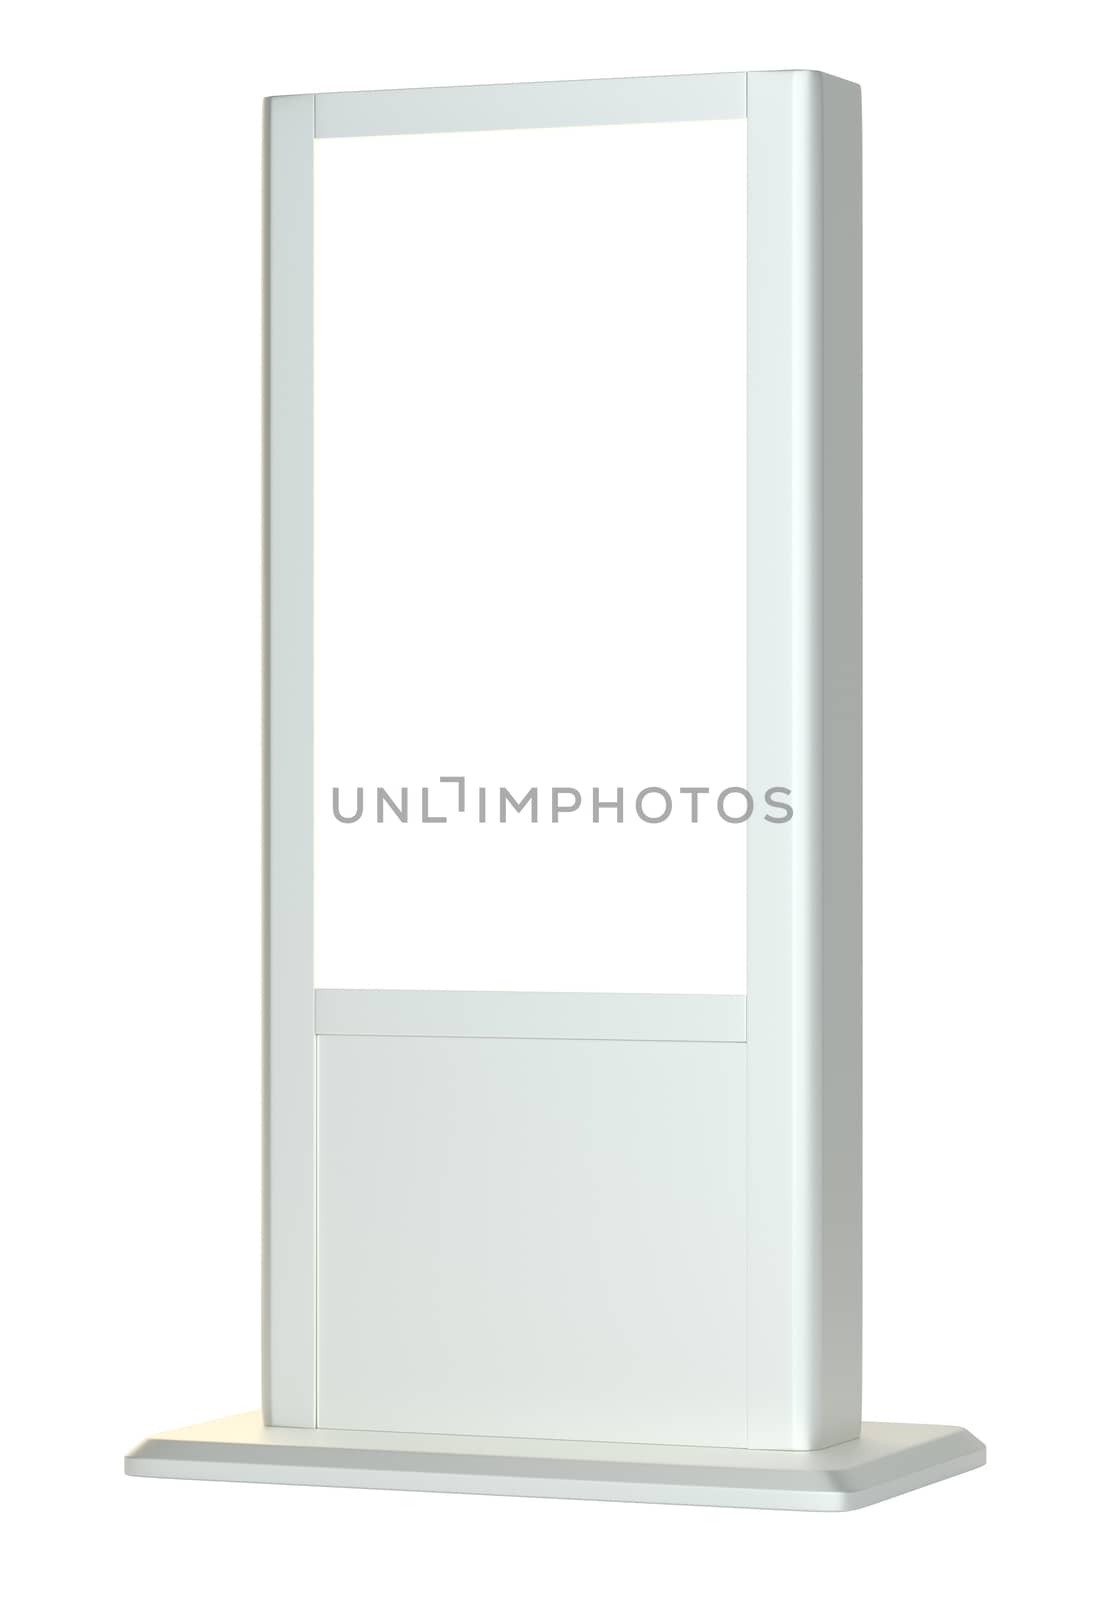 Realistic light box template by cherezoff